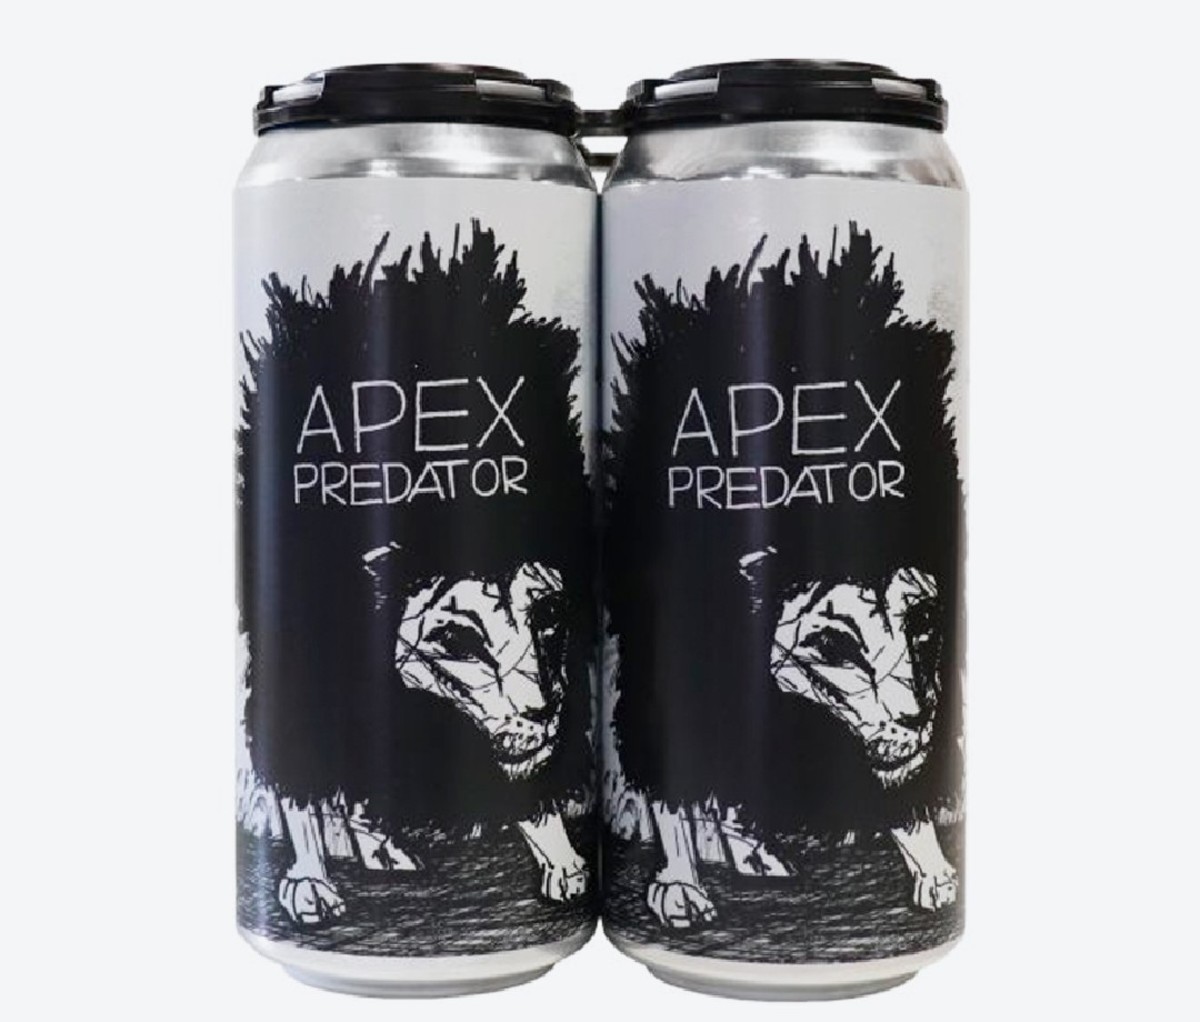 Bottle of Off Color Apex Predator beer